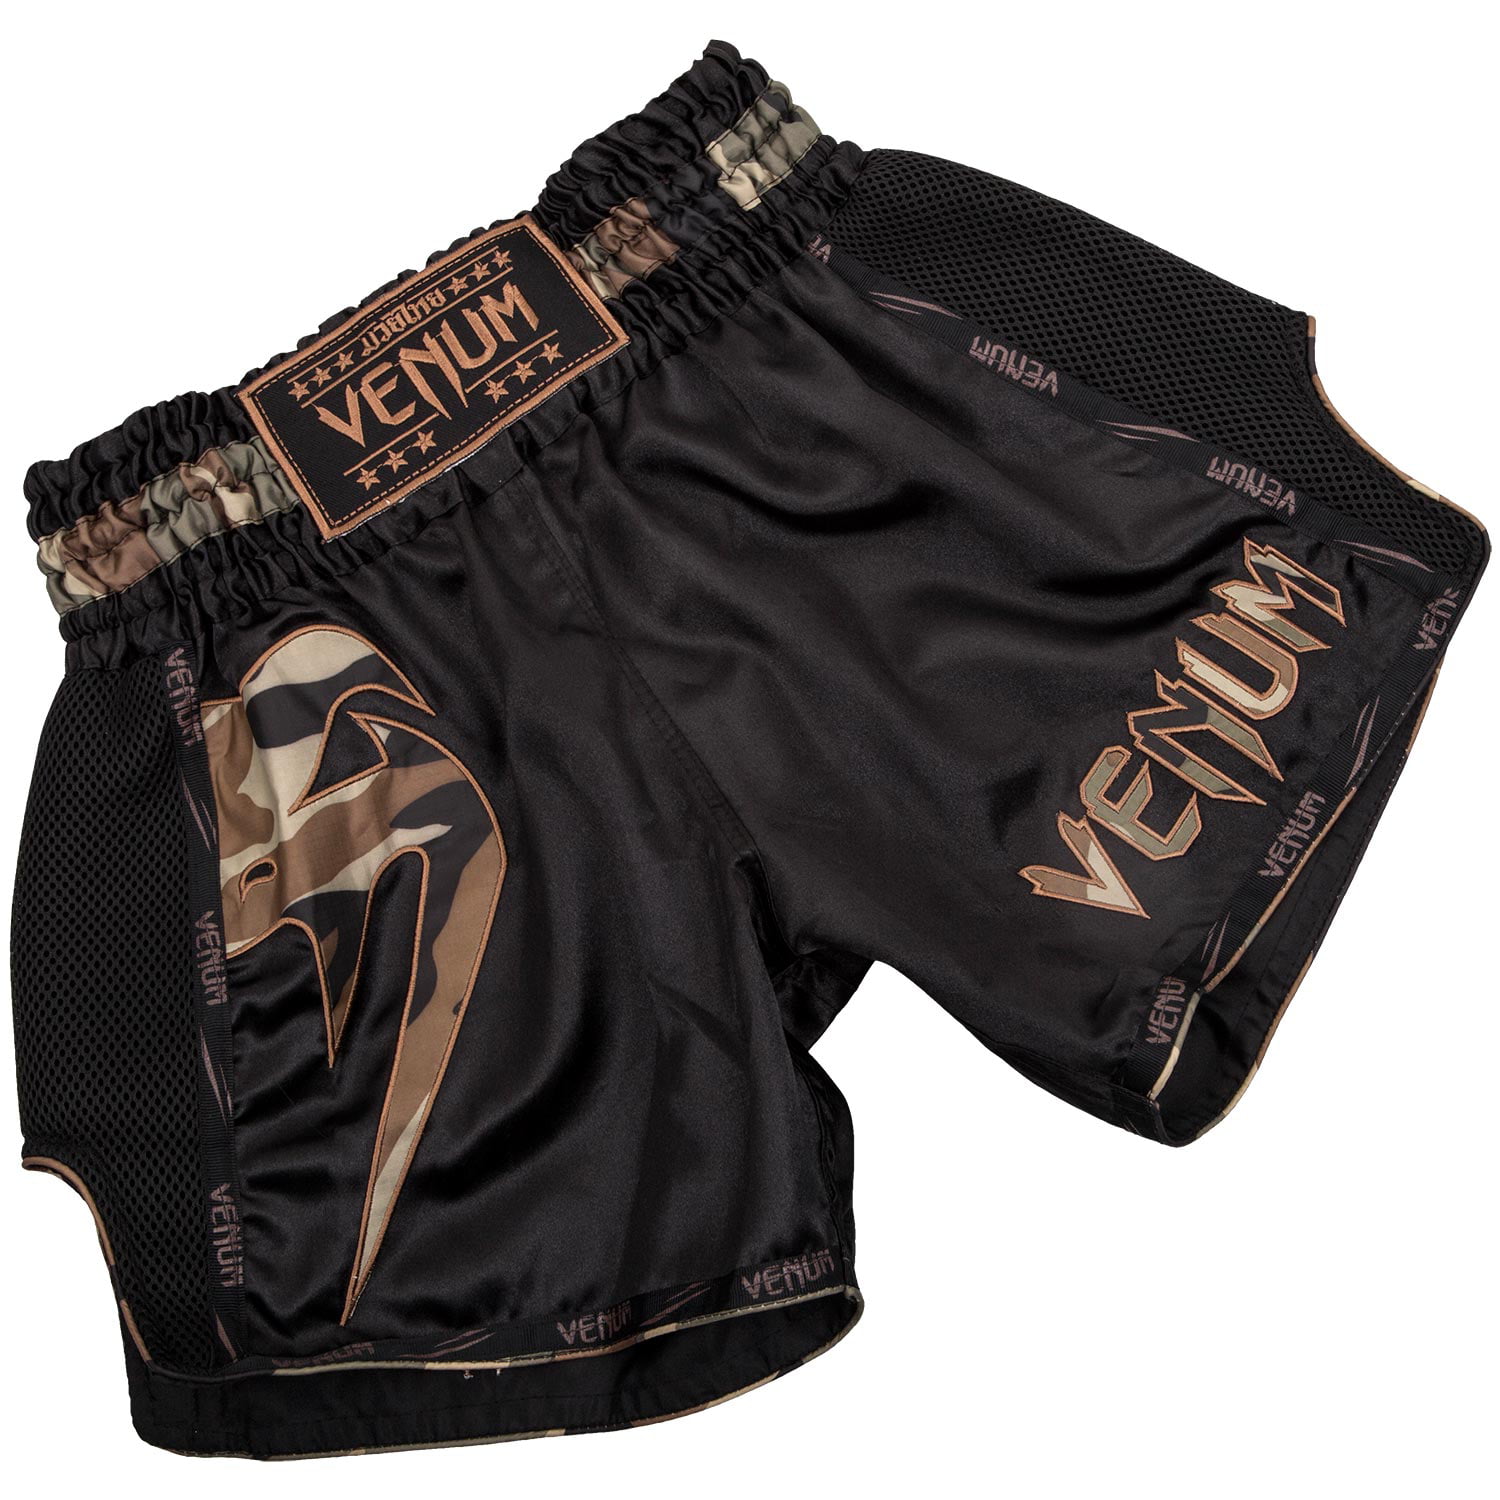 Venum Giant Muay Thai Shorts - Walmart.com